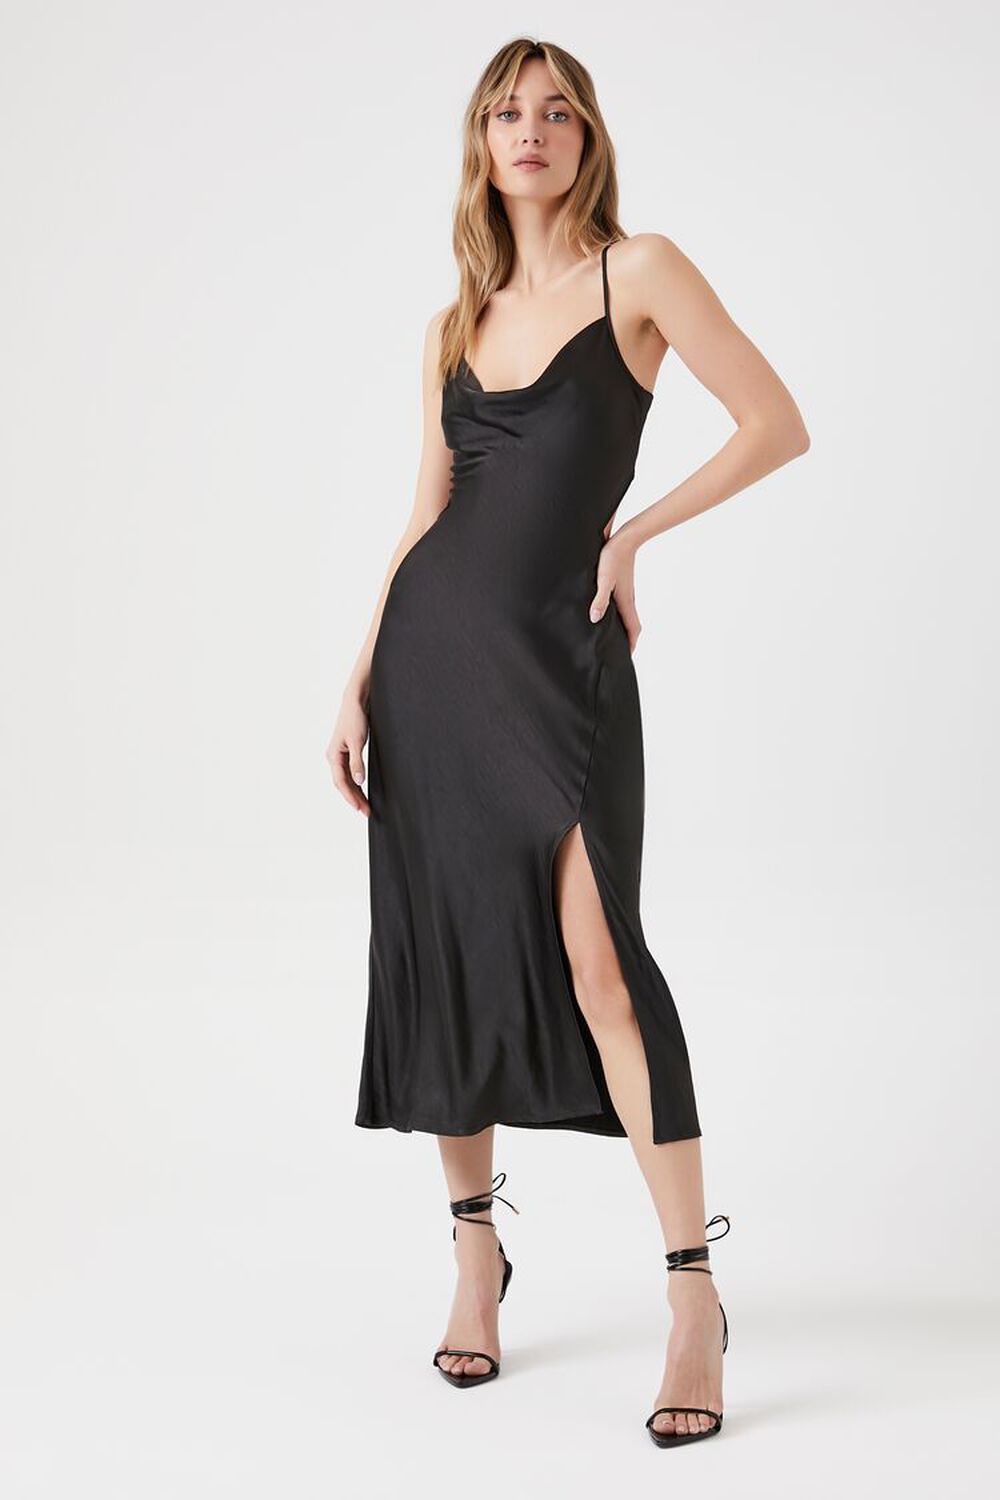 BLACK Satin Cowl Neck Midi Dress, image 1